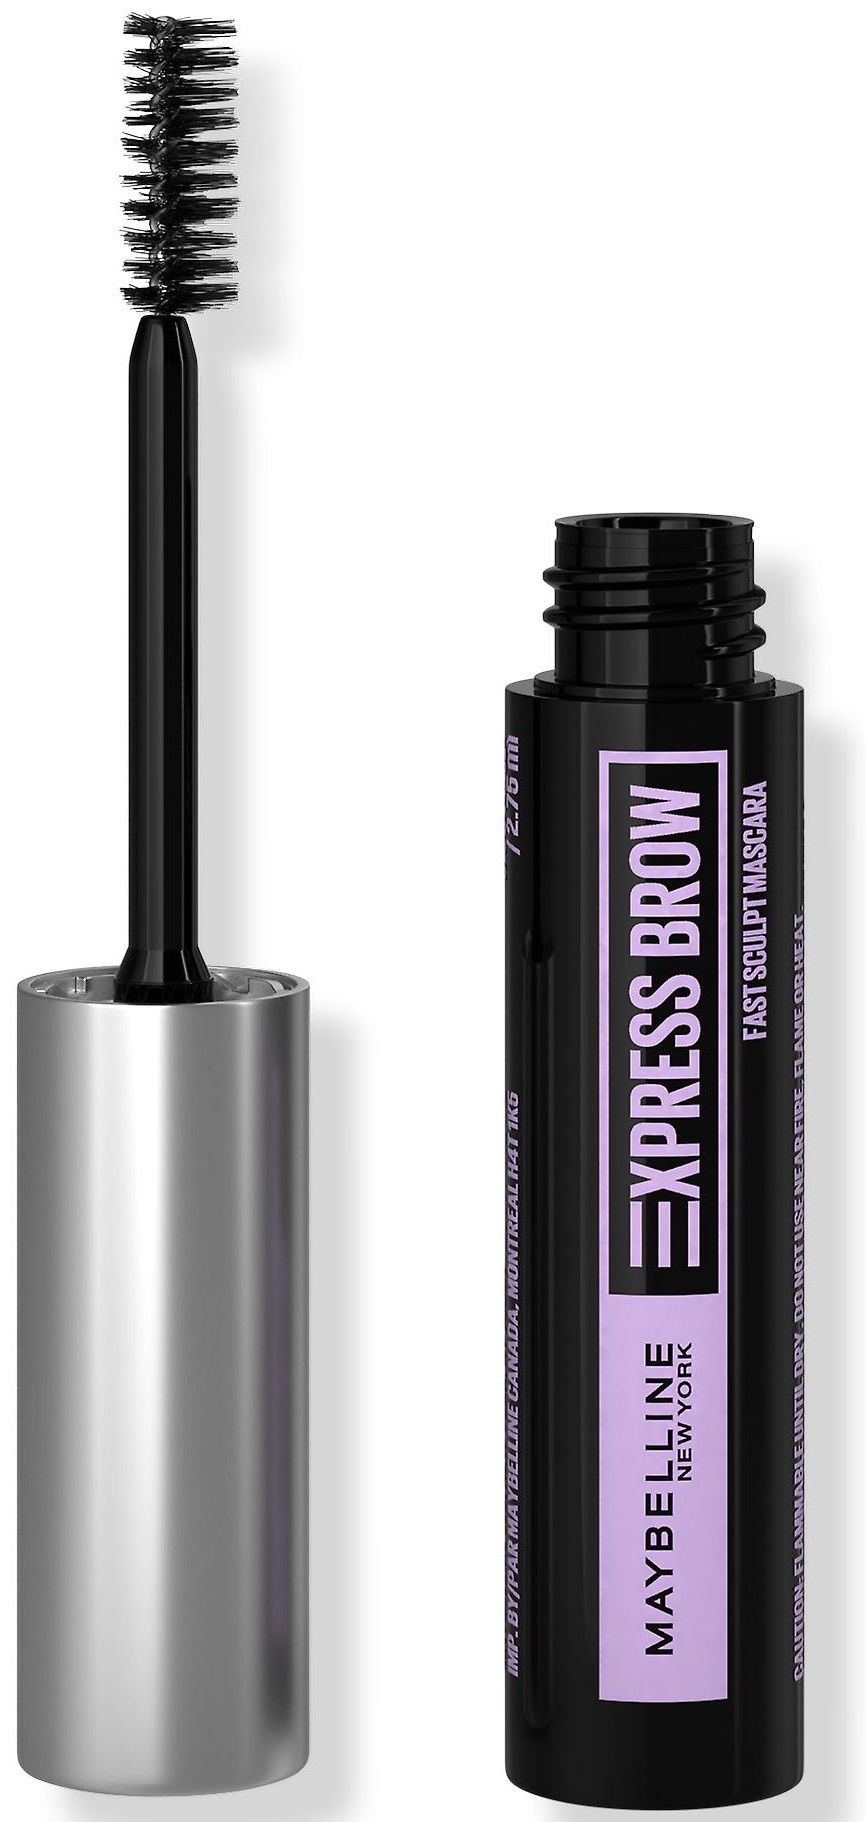 Maybelline Express Brow Fast Sculpt® Eyebrow Gel Mascara